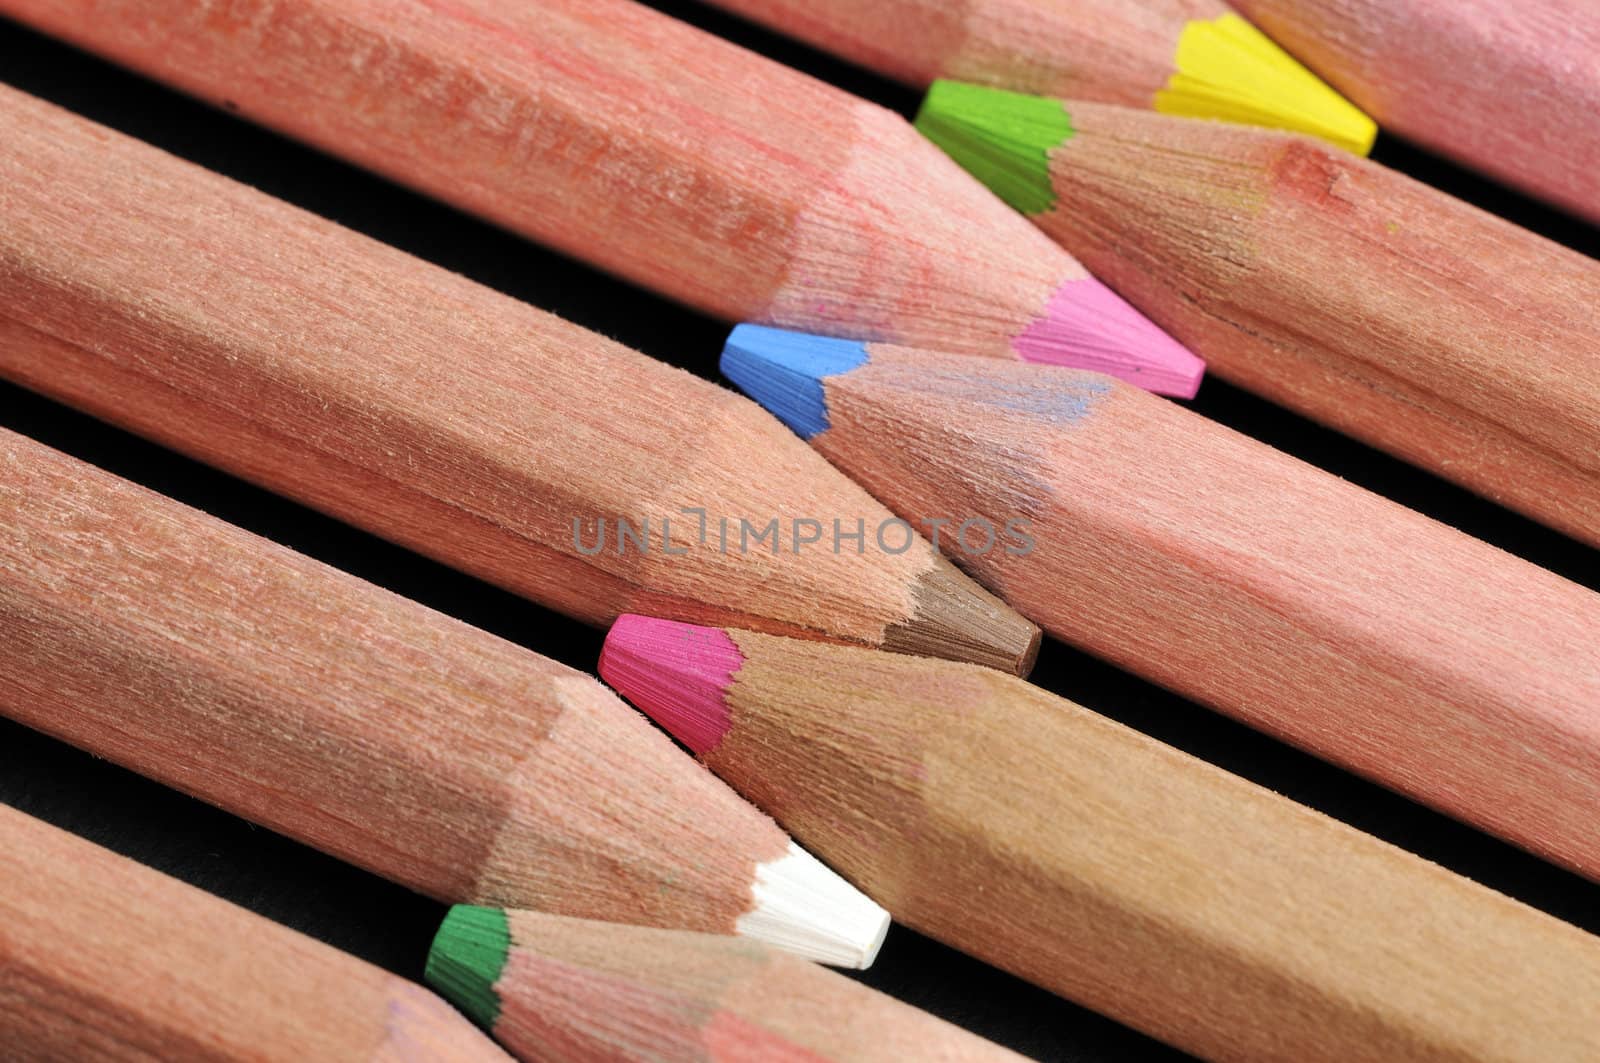 Colored pencils by Vagabond